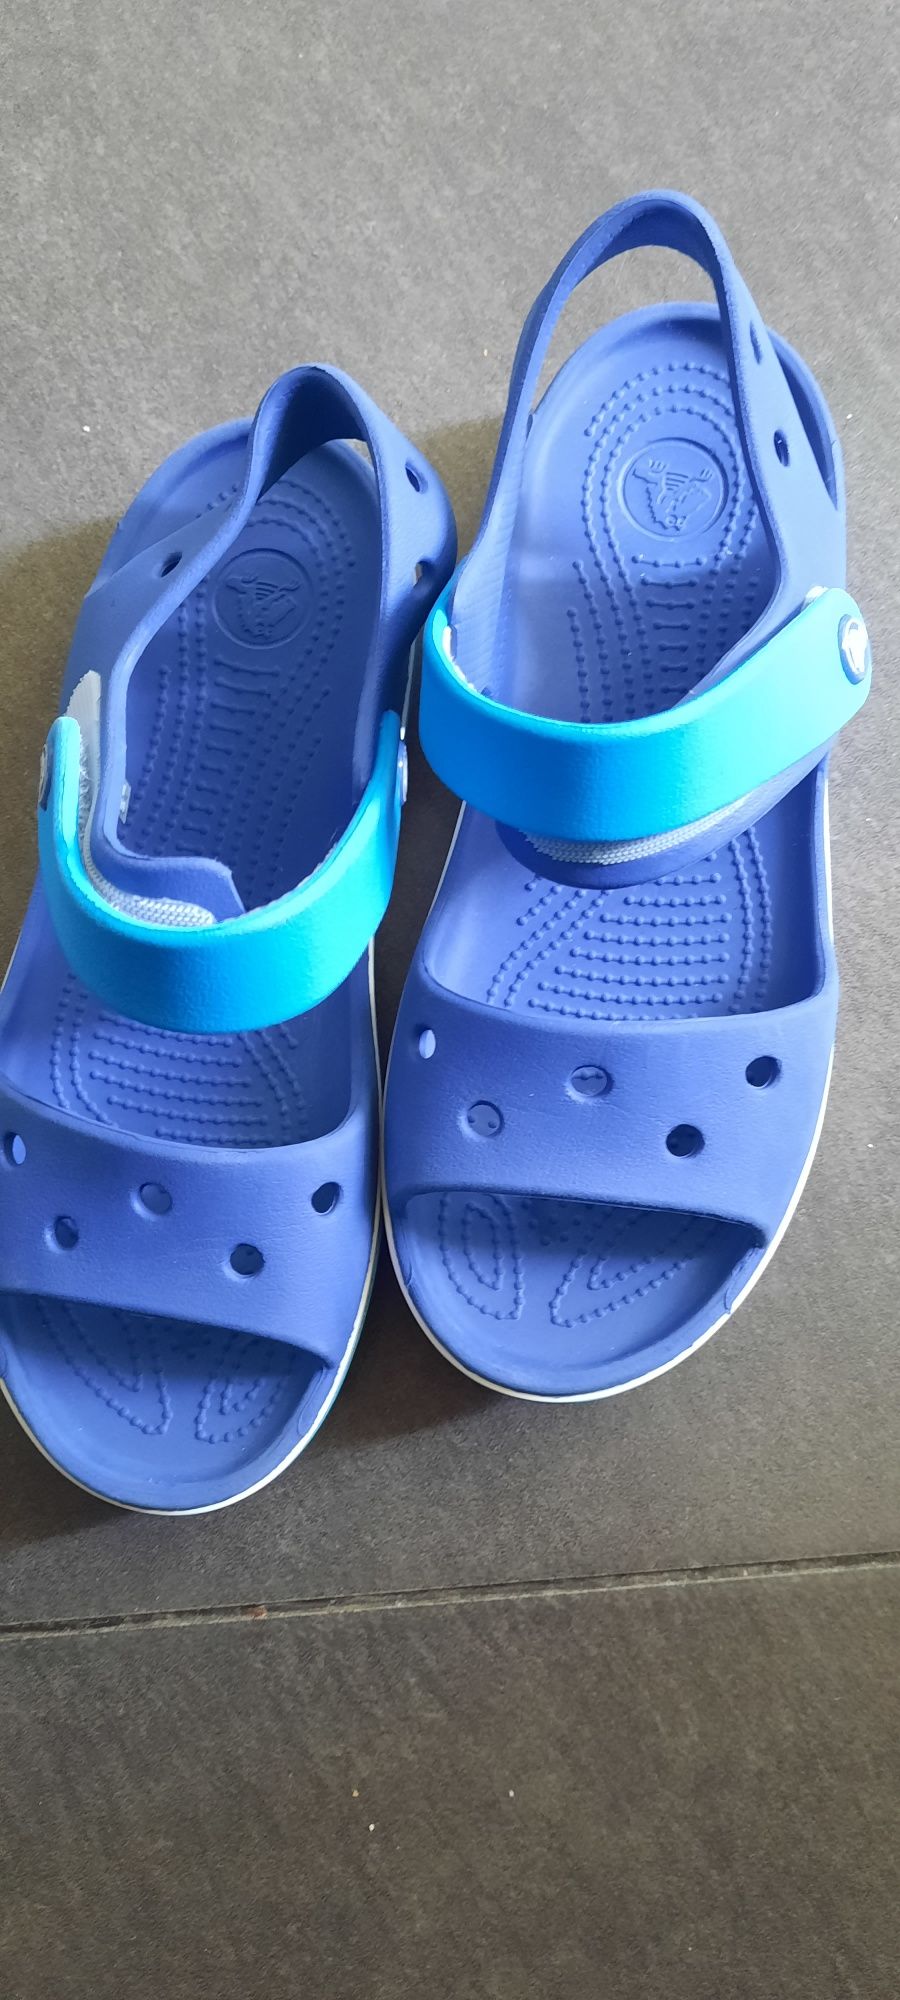 Crocs sandale J 2